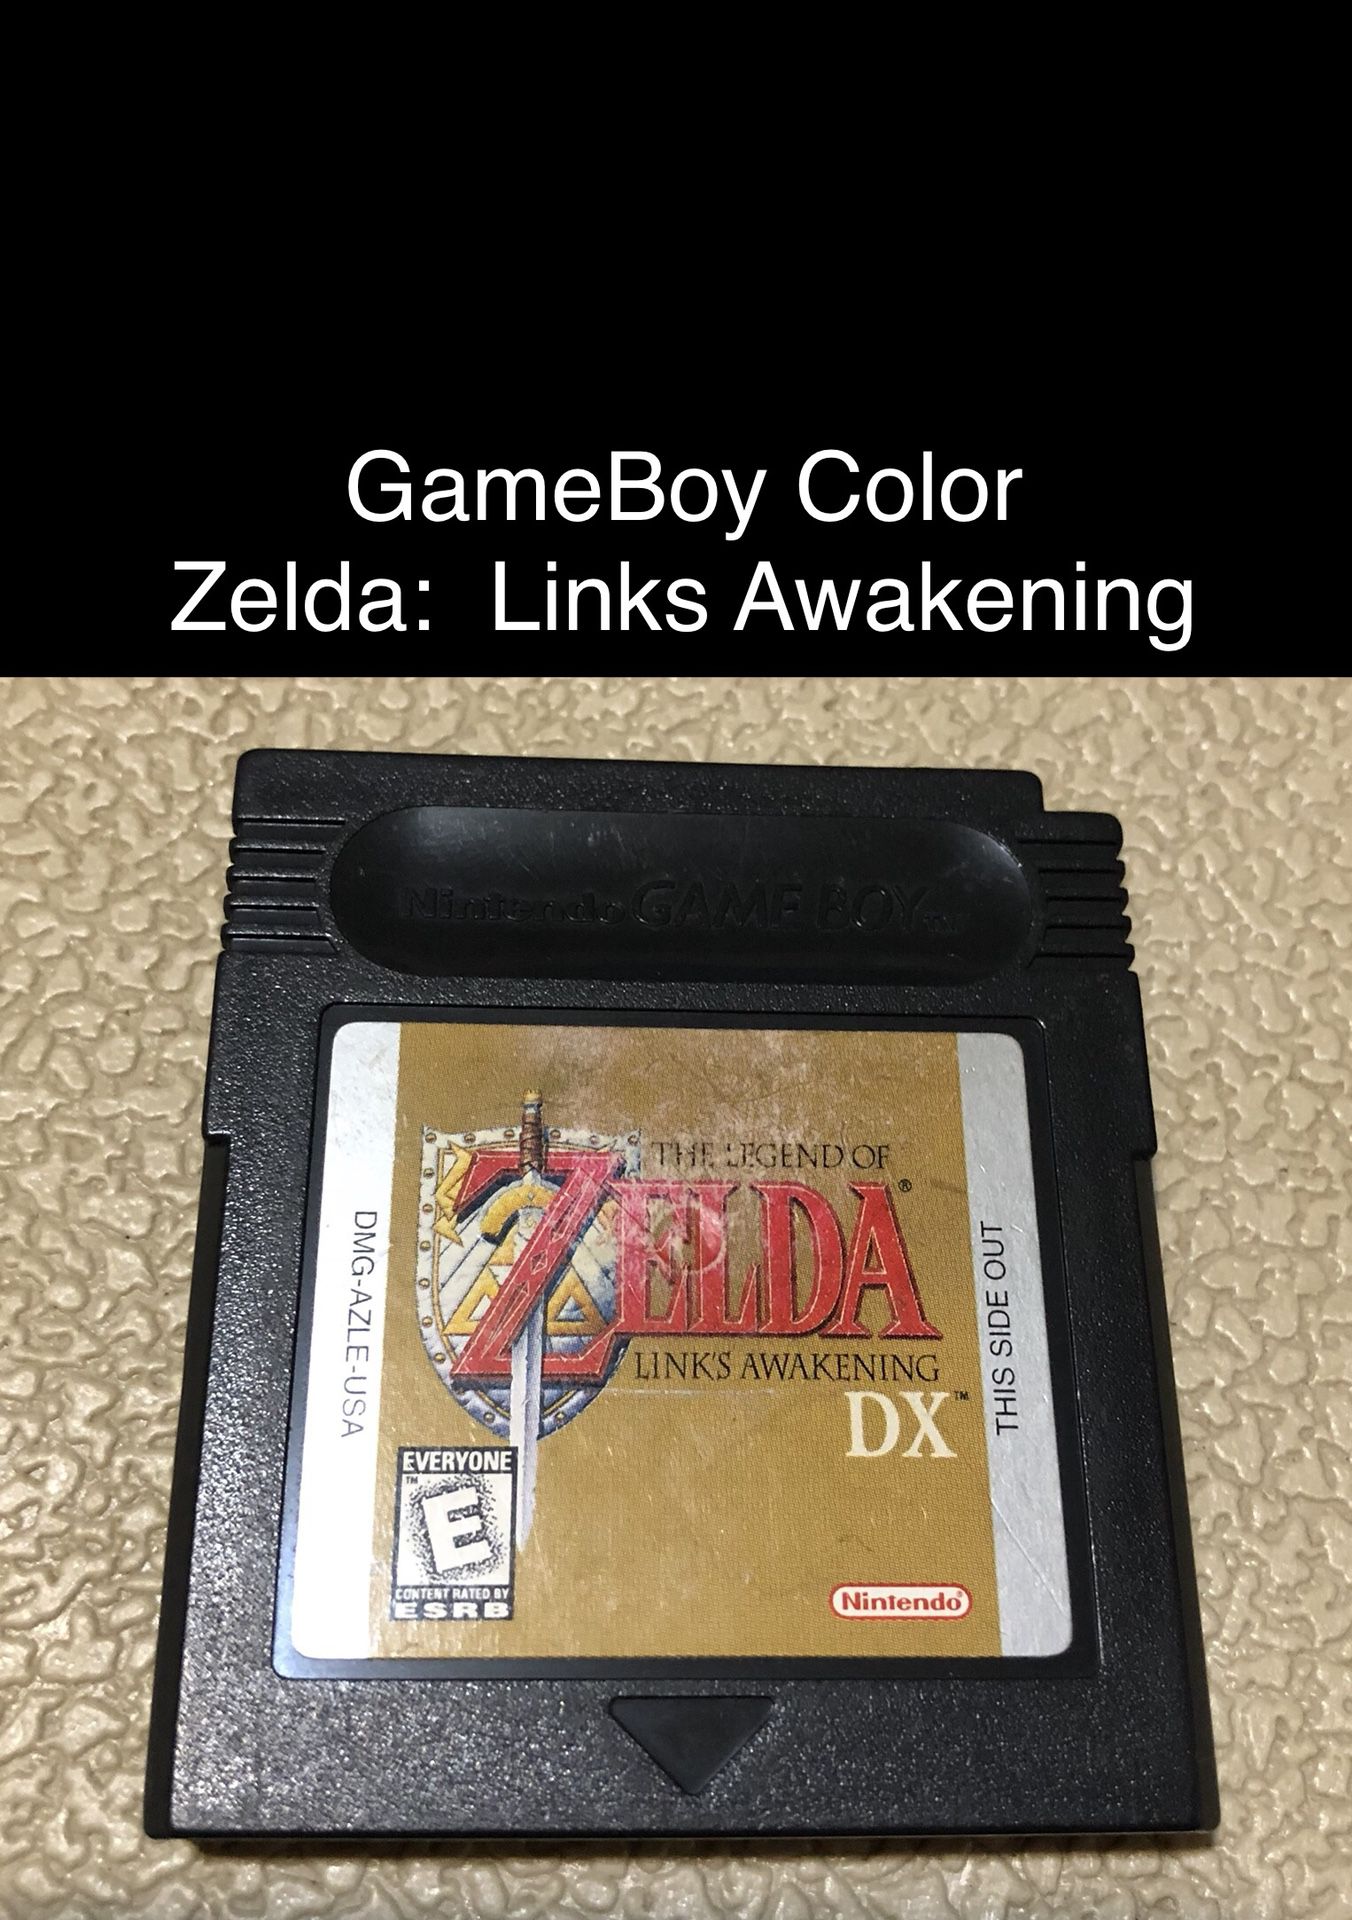 The Legend of Zelda: Link's Awakening DX [Traduzido para Português]